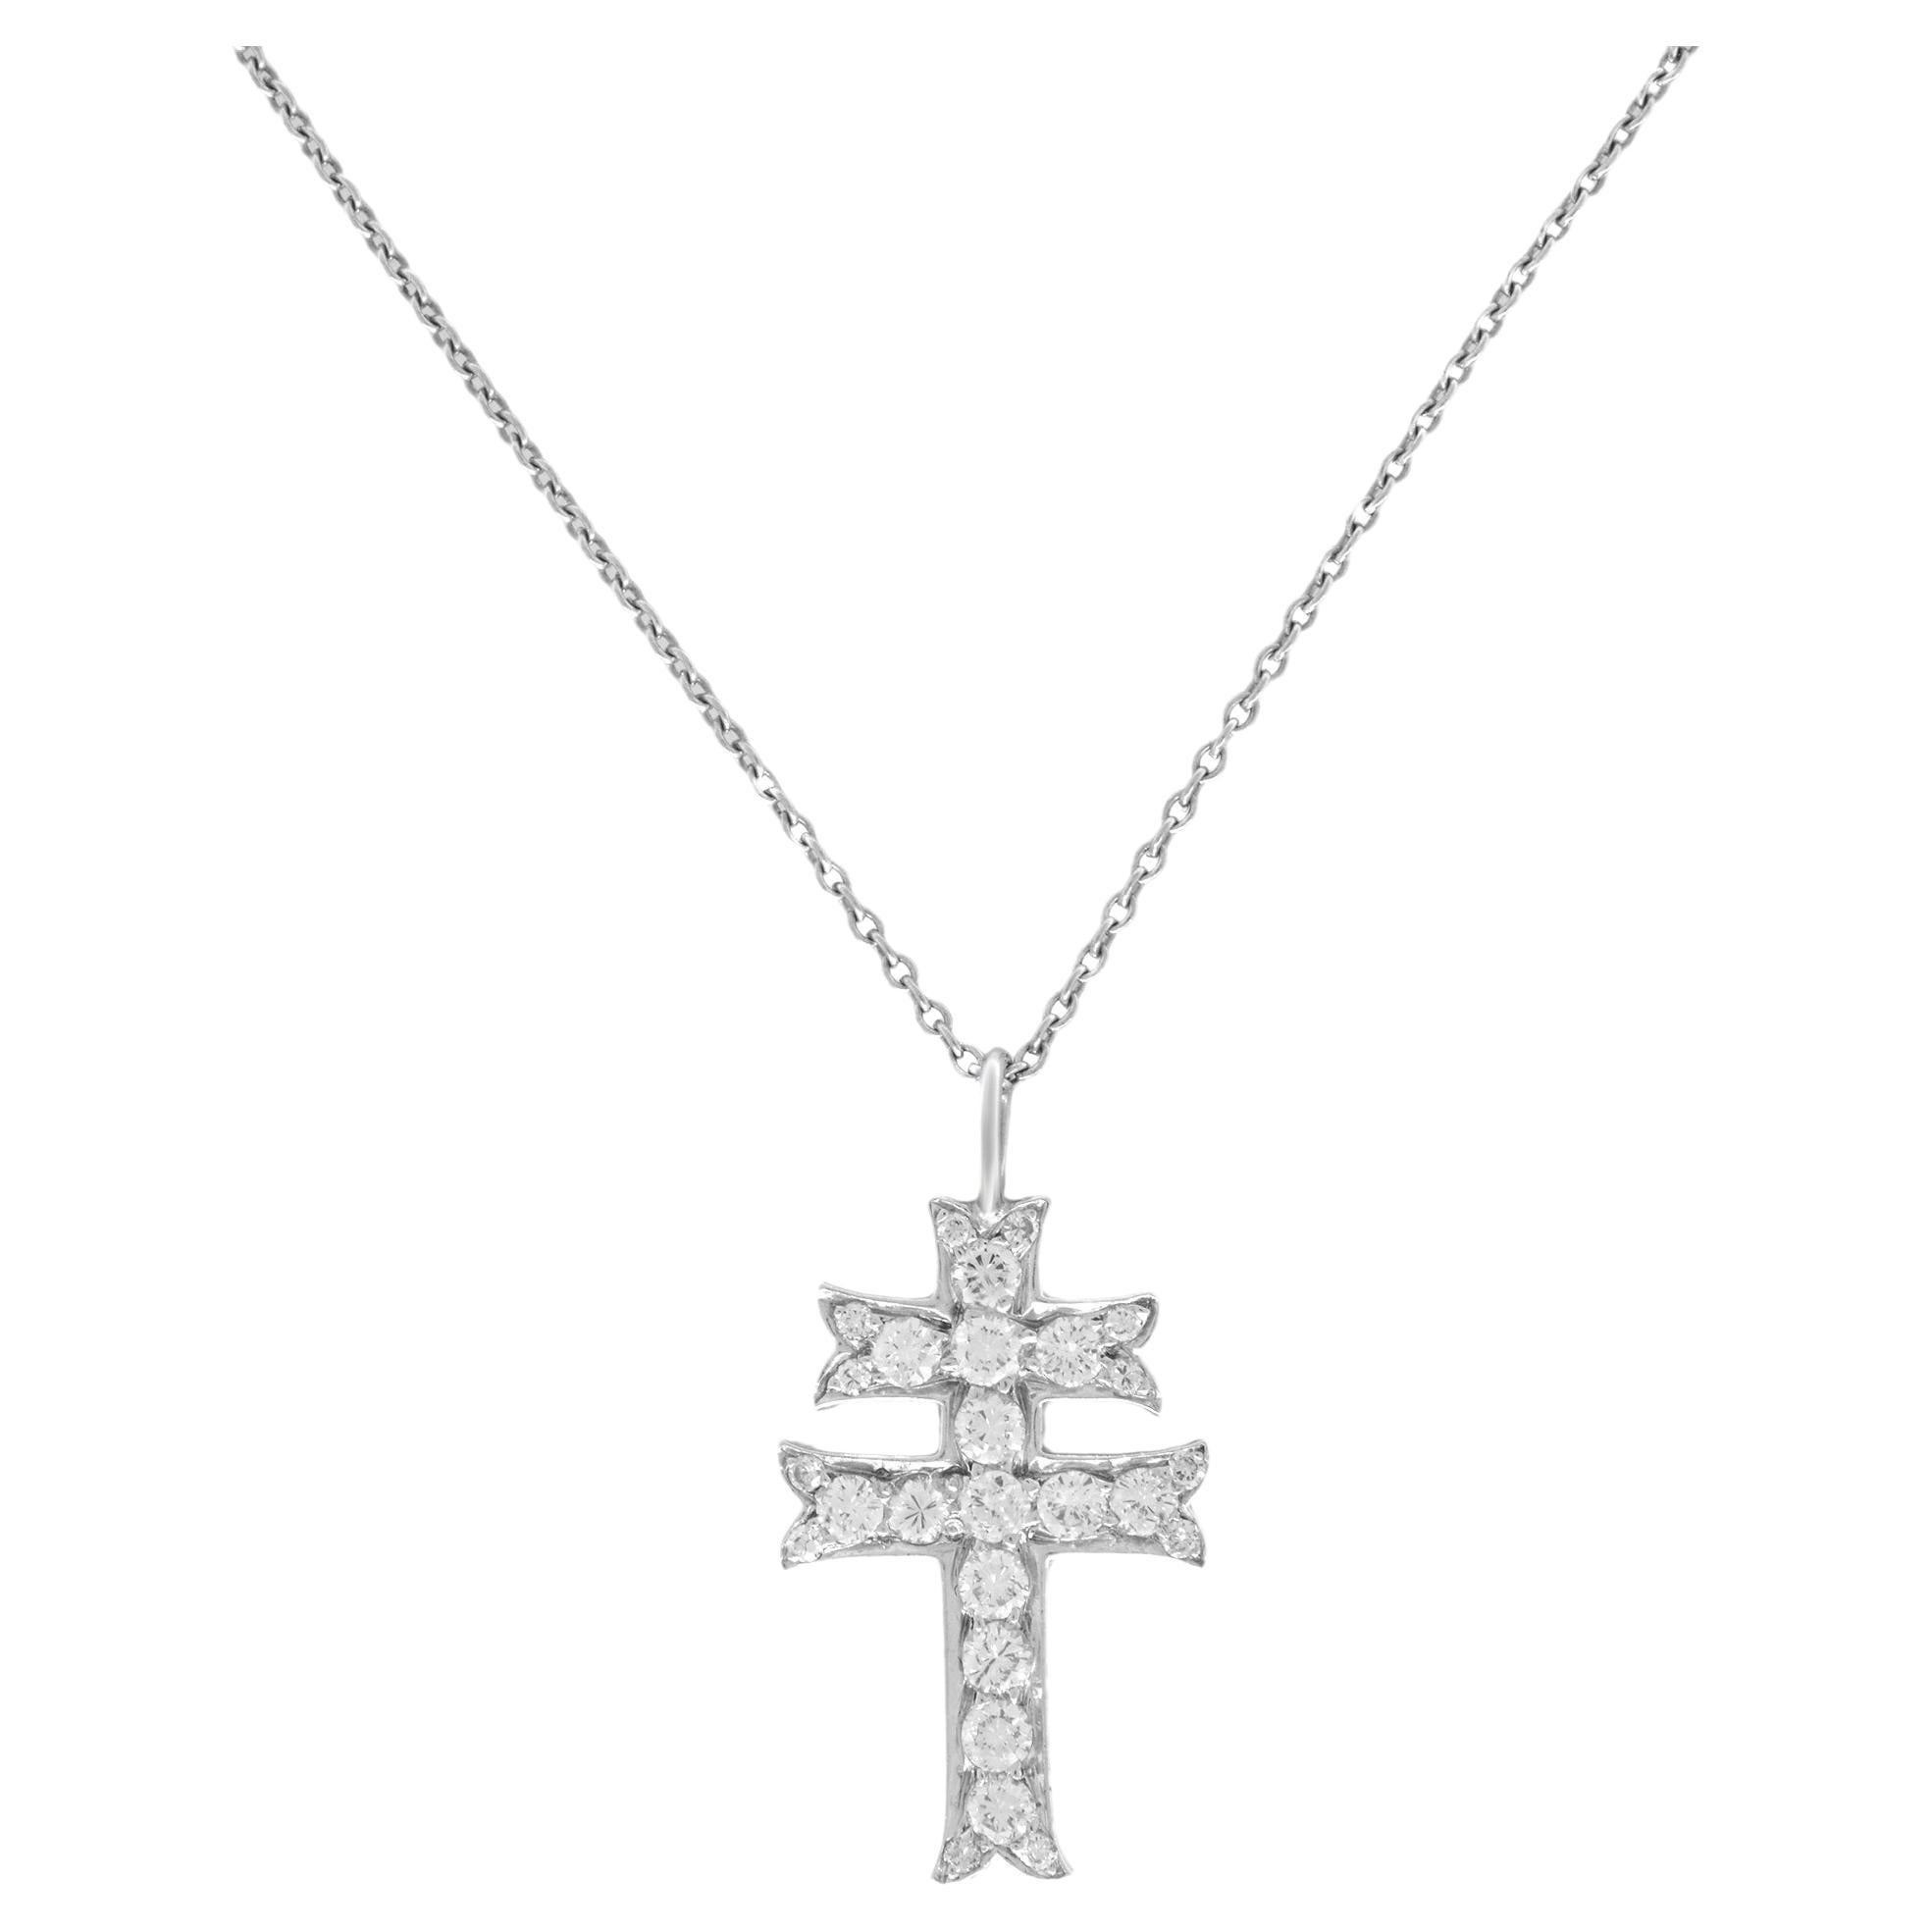 Rachel Koen Diamond Cross Pendant Necklace Platinum 0.33Cttw 16 inches